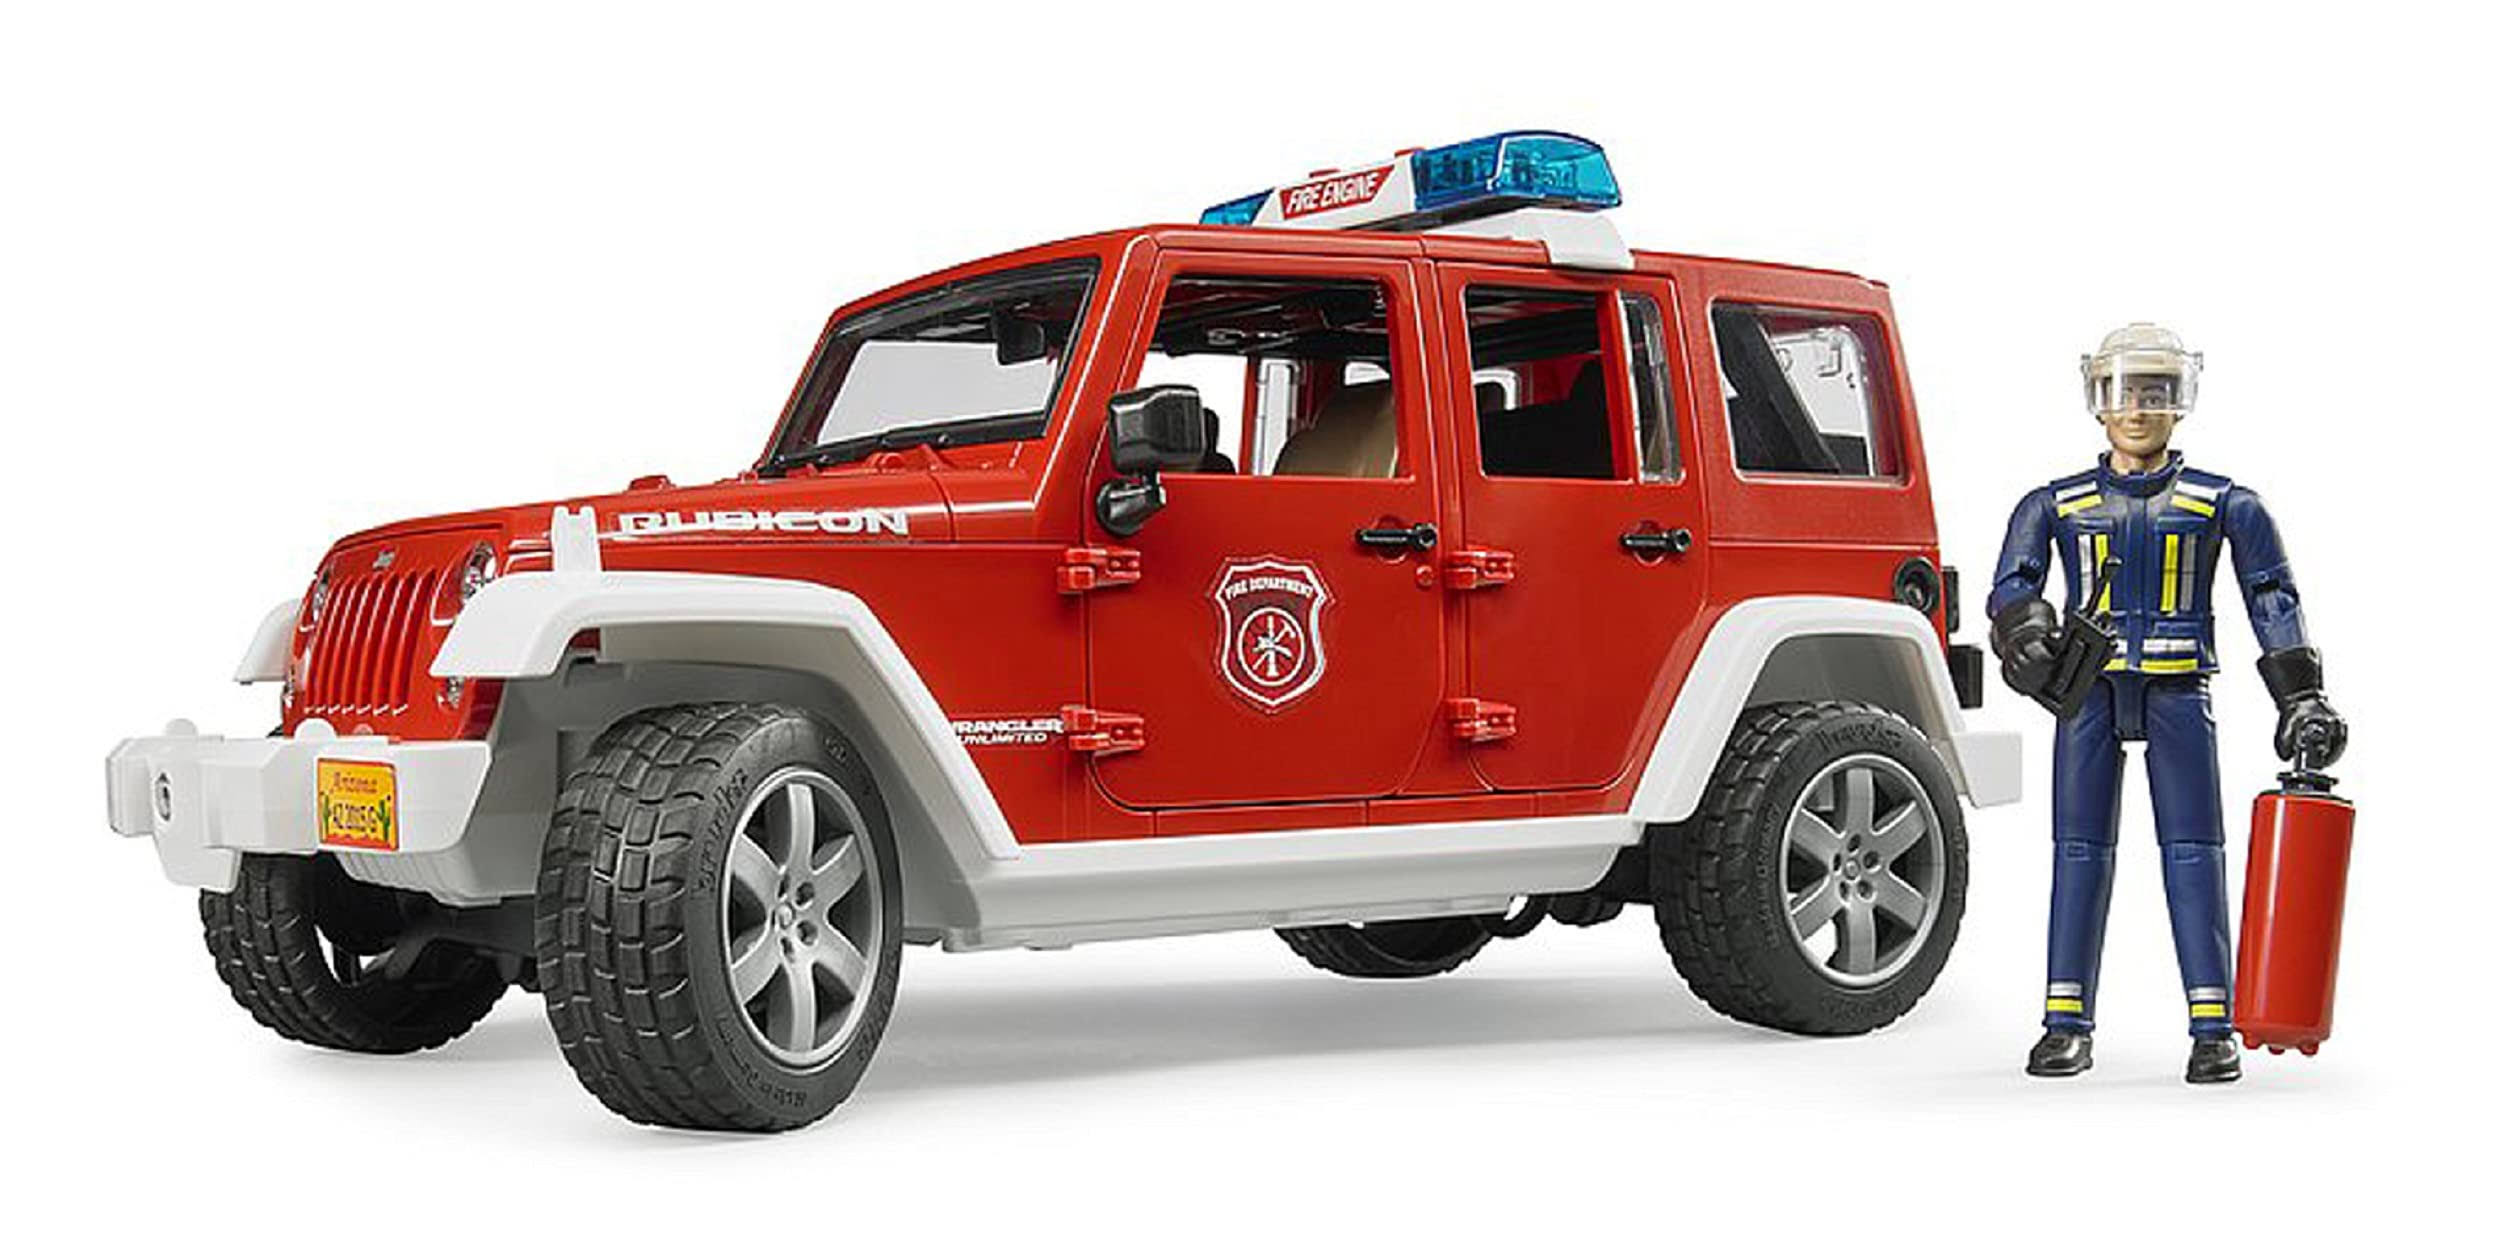 Bruder 2528 Jeep Wrangler Rubicon Fire Vehicle